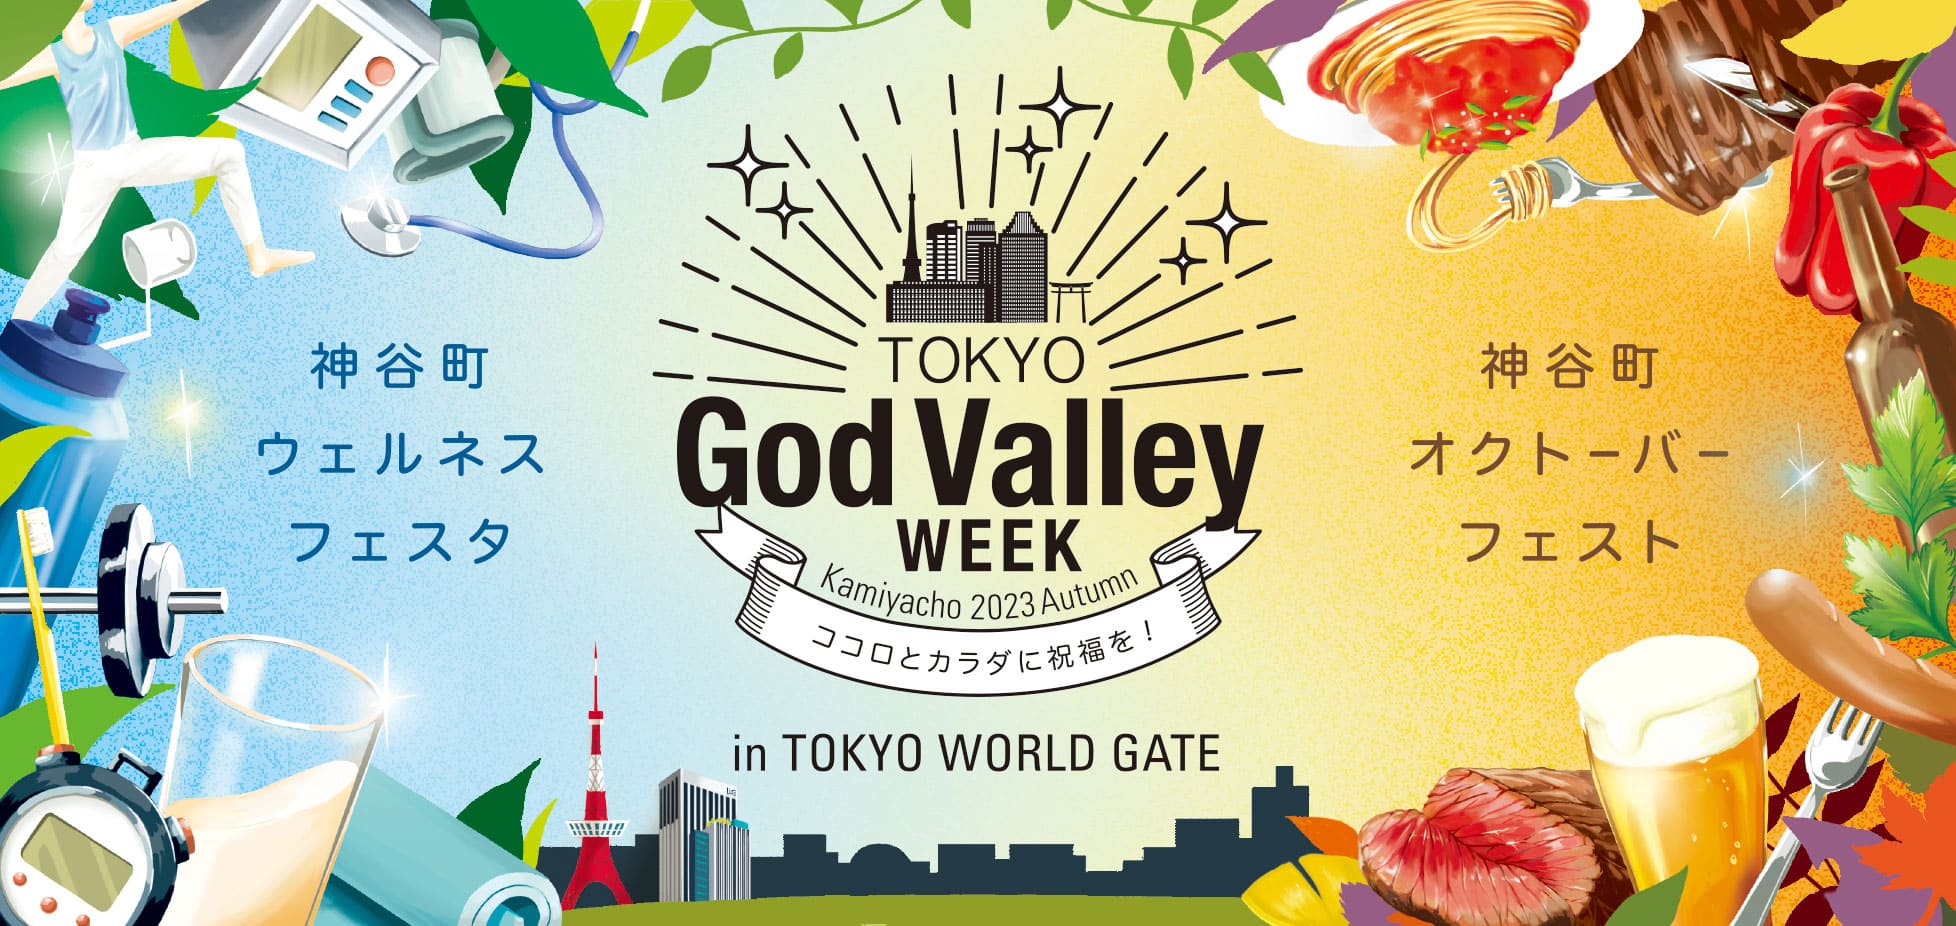 TOKYO God Valley WEEK Kamiyacho 2023 Autumn　～神谷町ウェルネスフェスタ/神谷町オクトーバーフェスト～